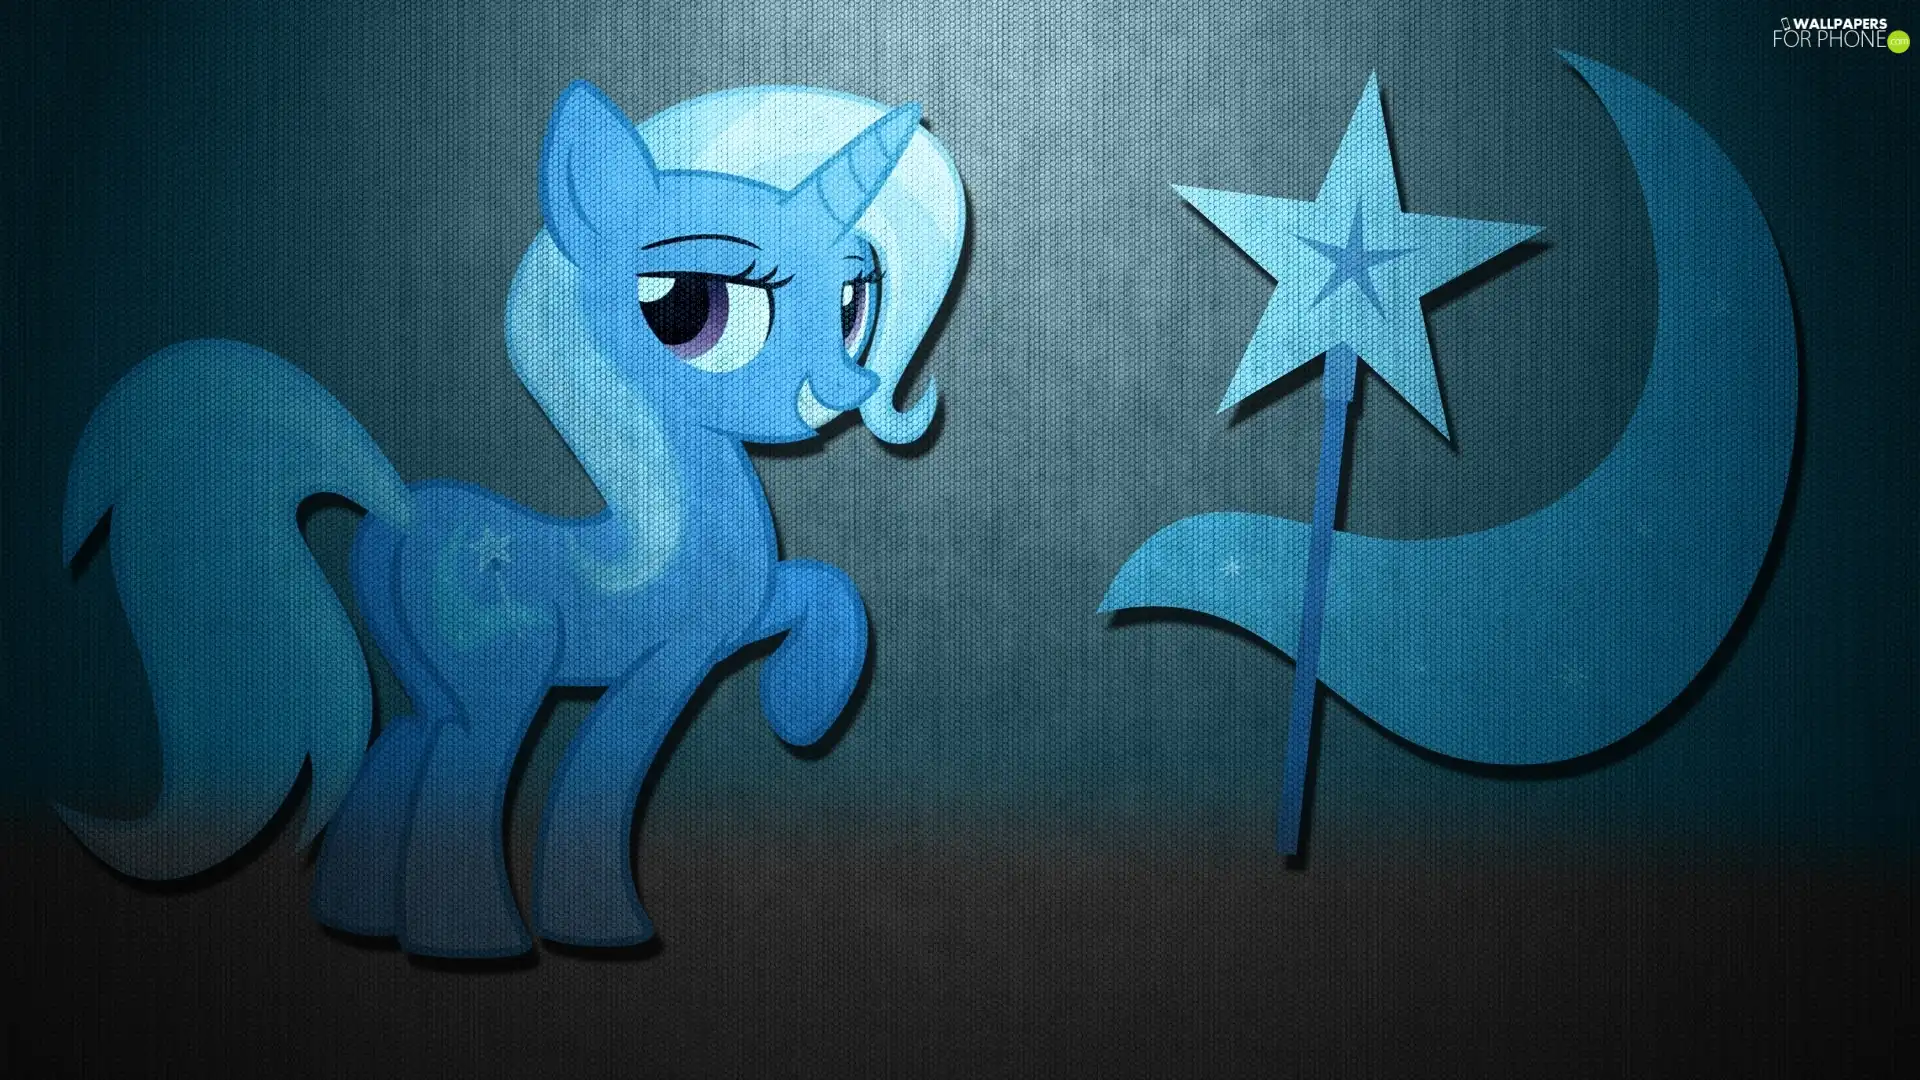 My Little Pony Friendship is Magic, Trixie